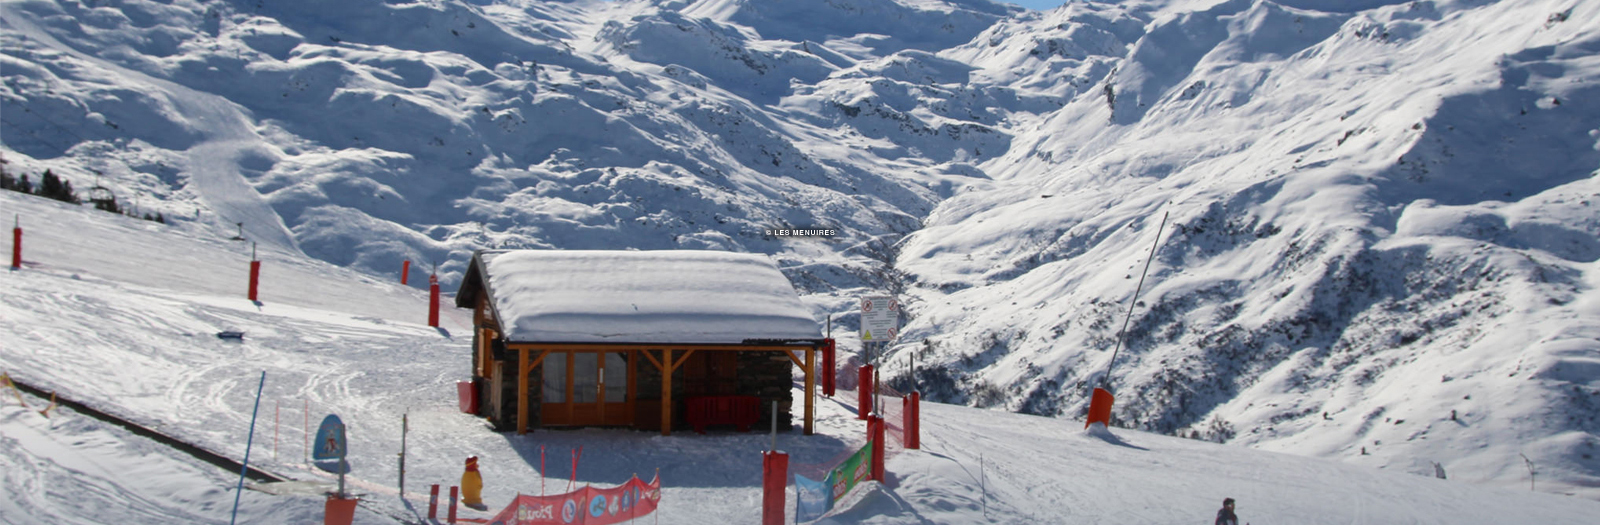 Les Menuires, France Ski Trips